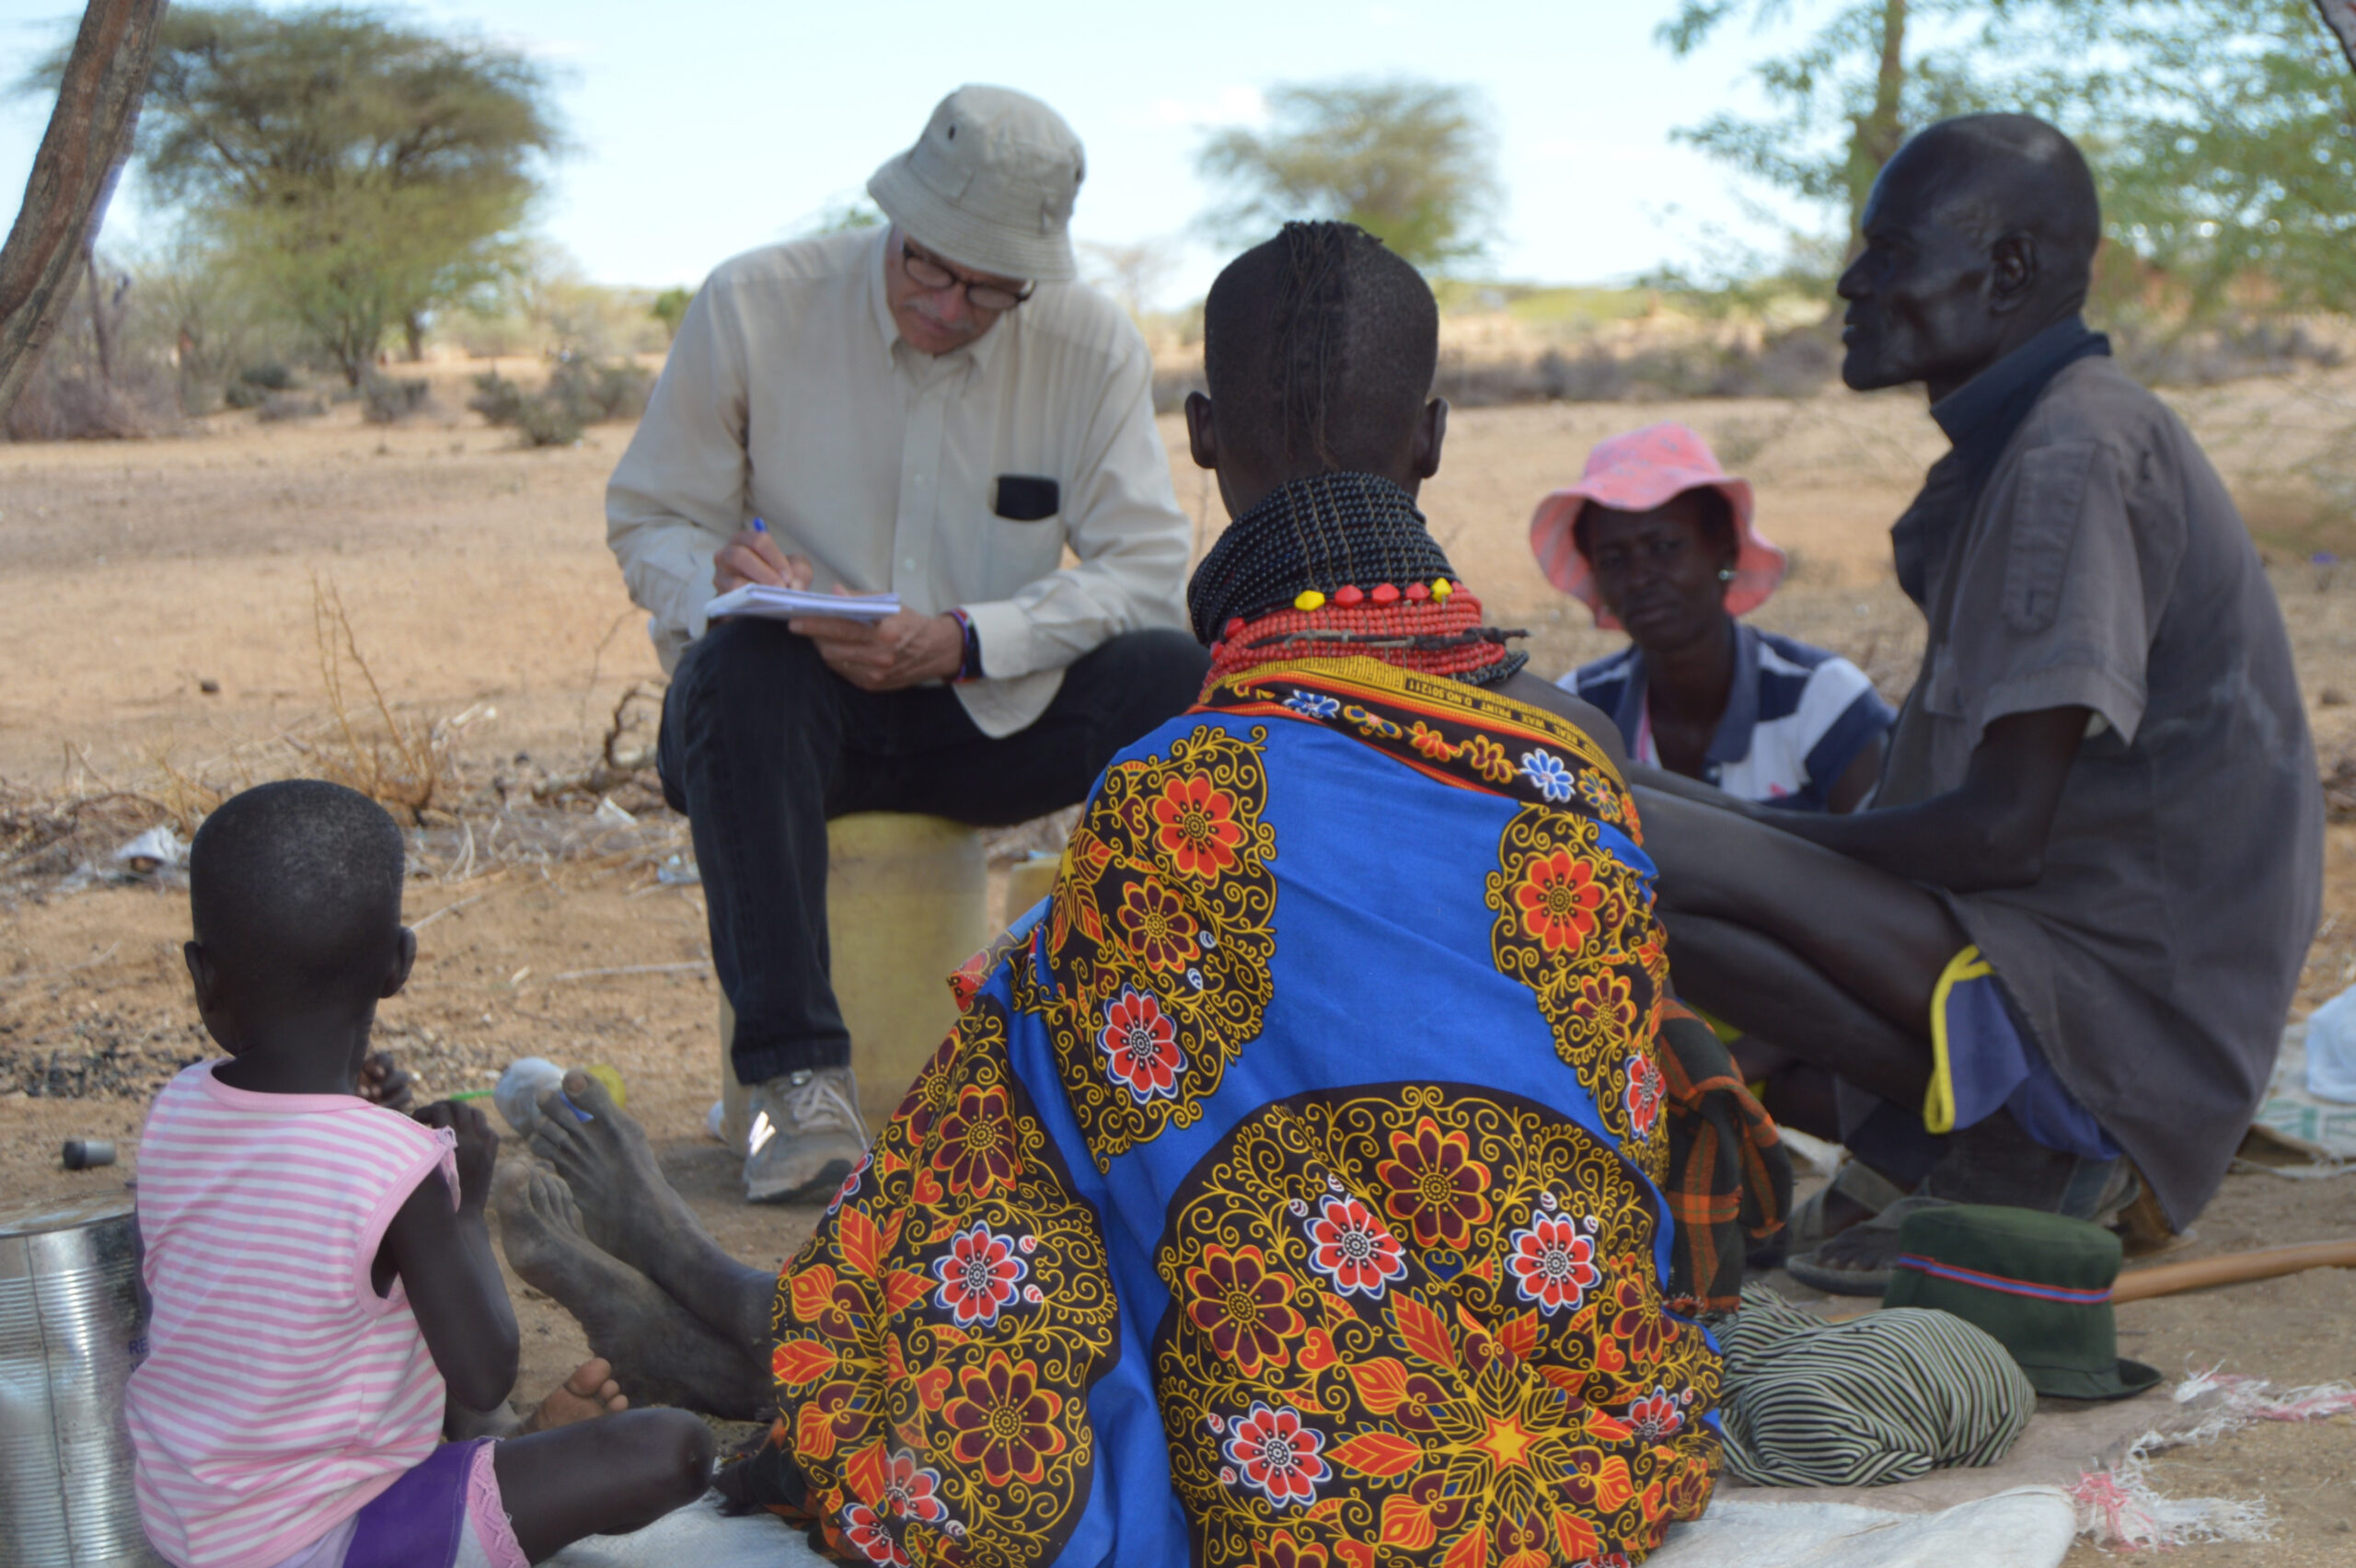 Researcher Dan Maxwell interviews local people in Kenya